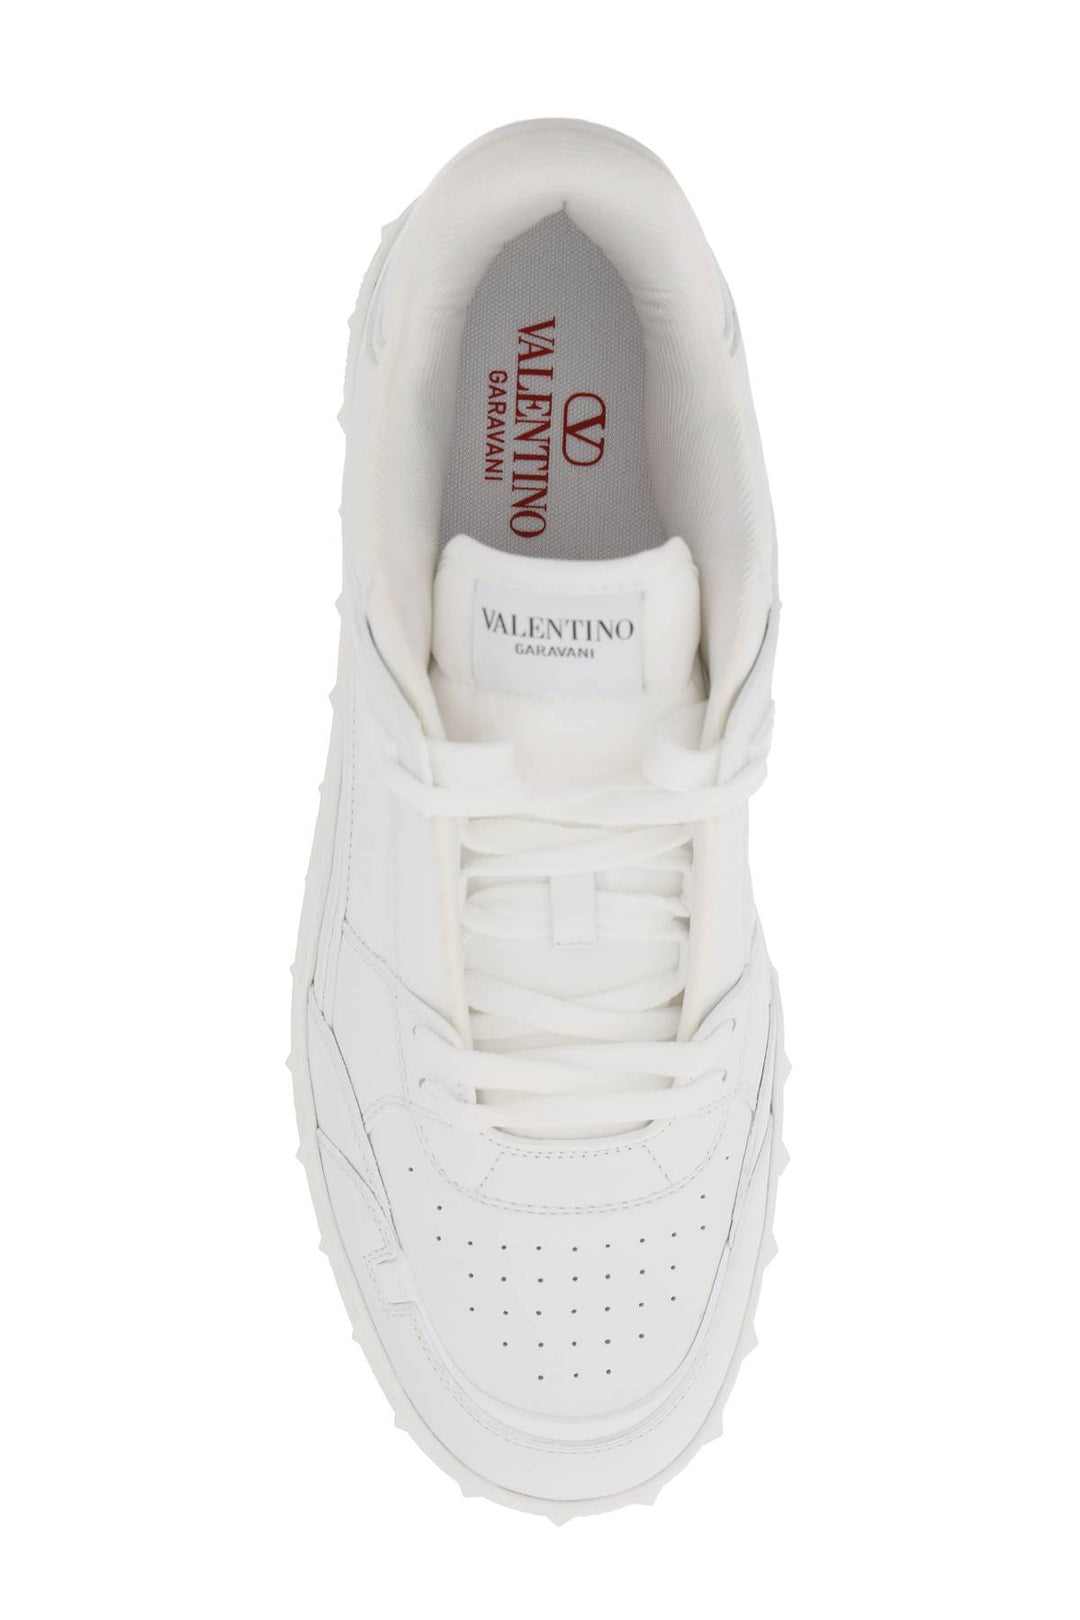 Valentino Garavani Freedots Low Top Sneakers   White